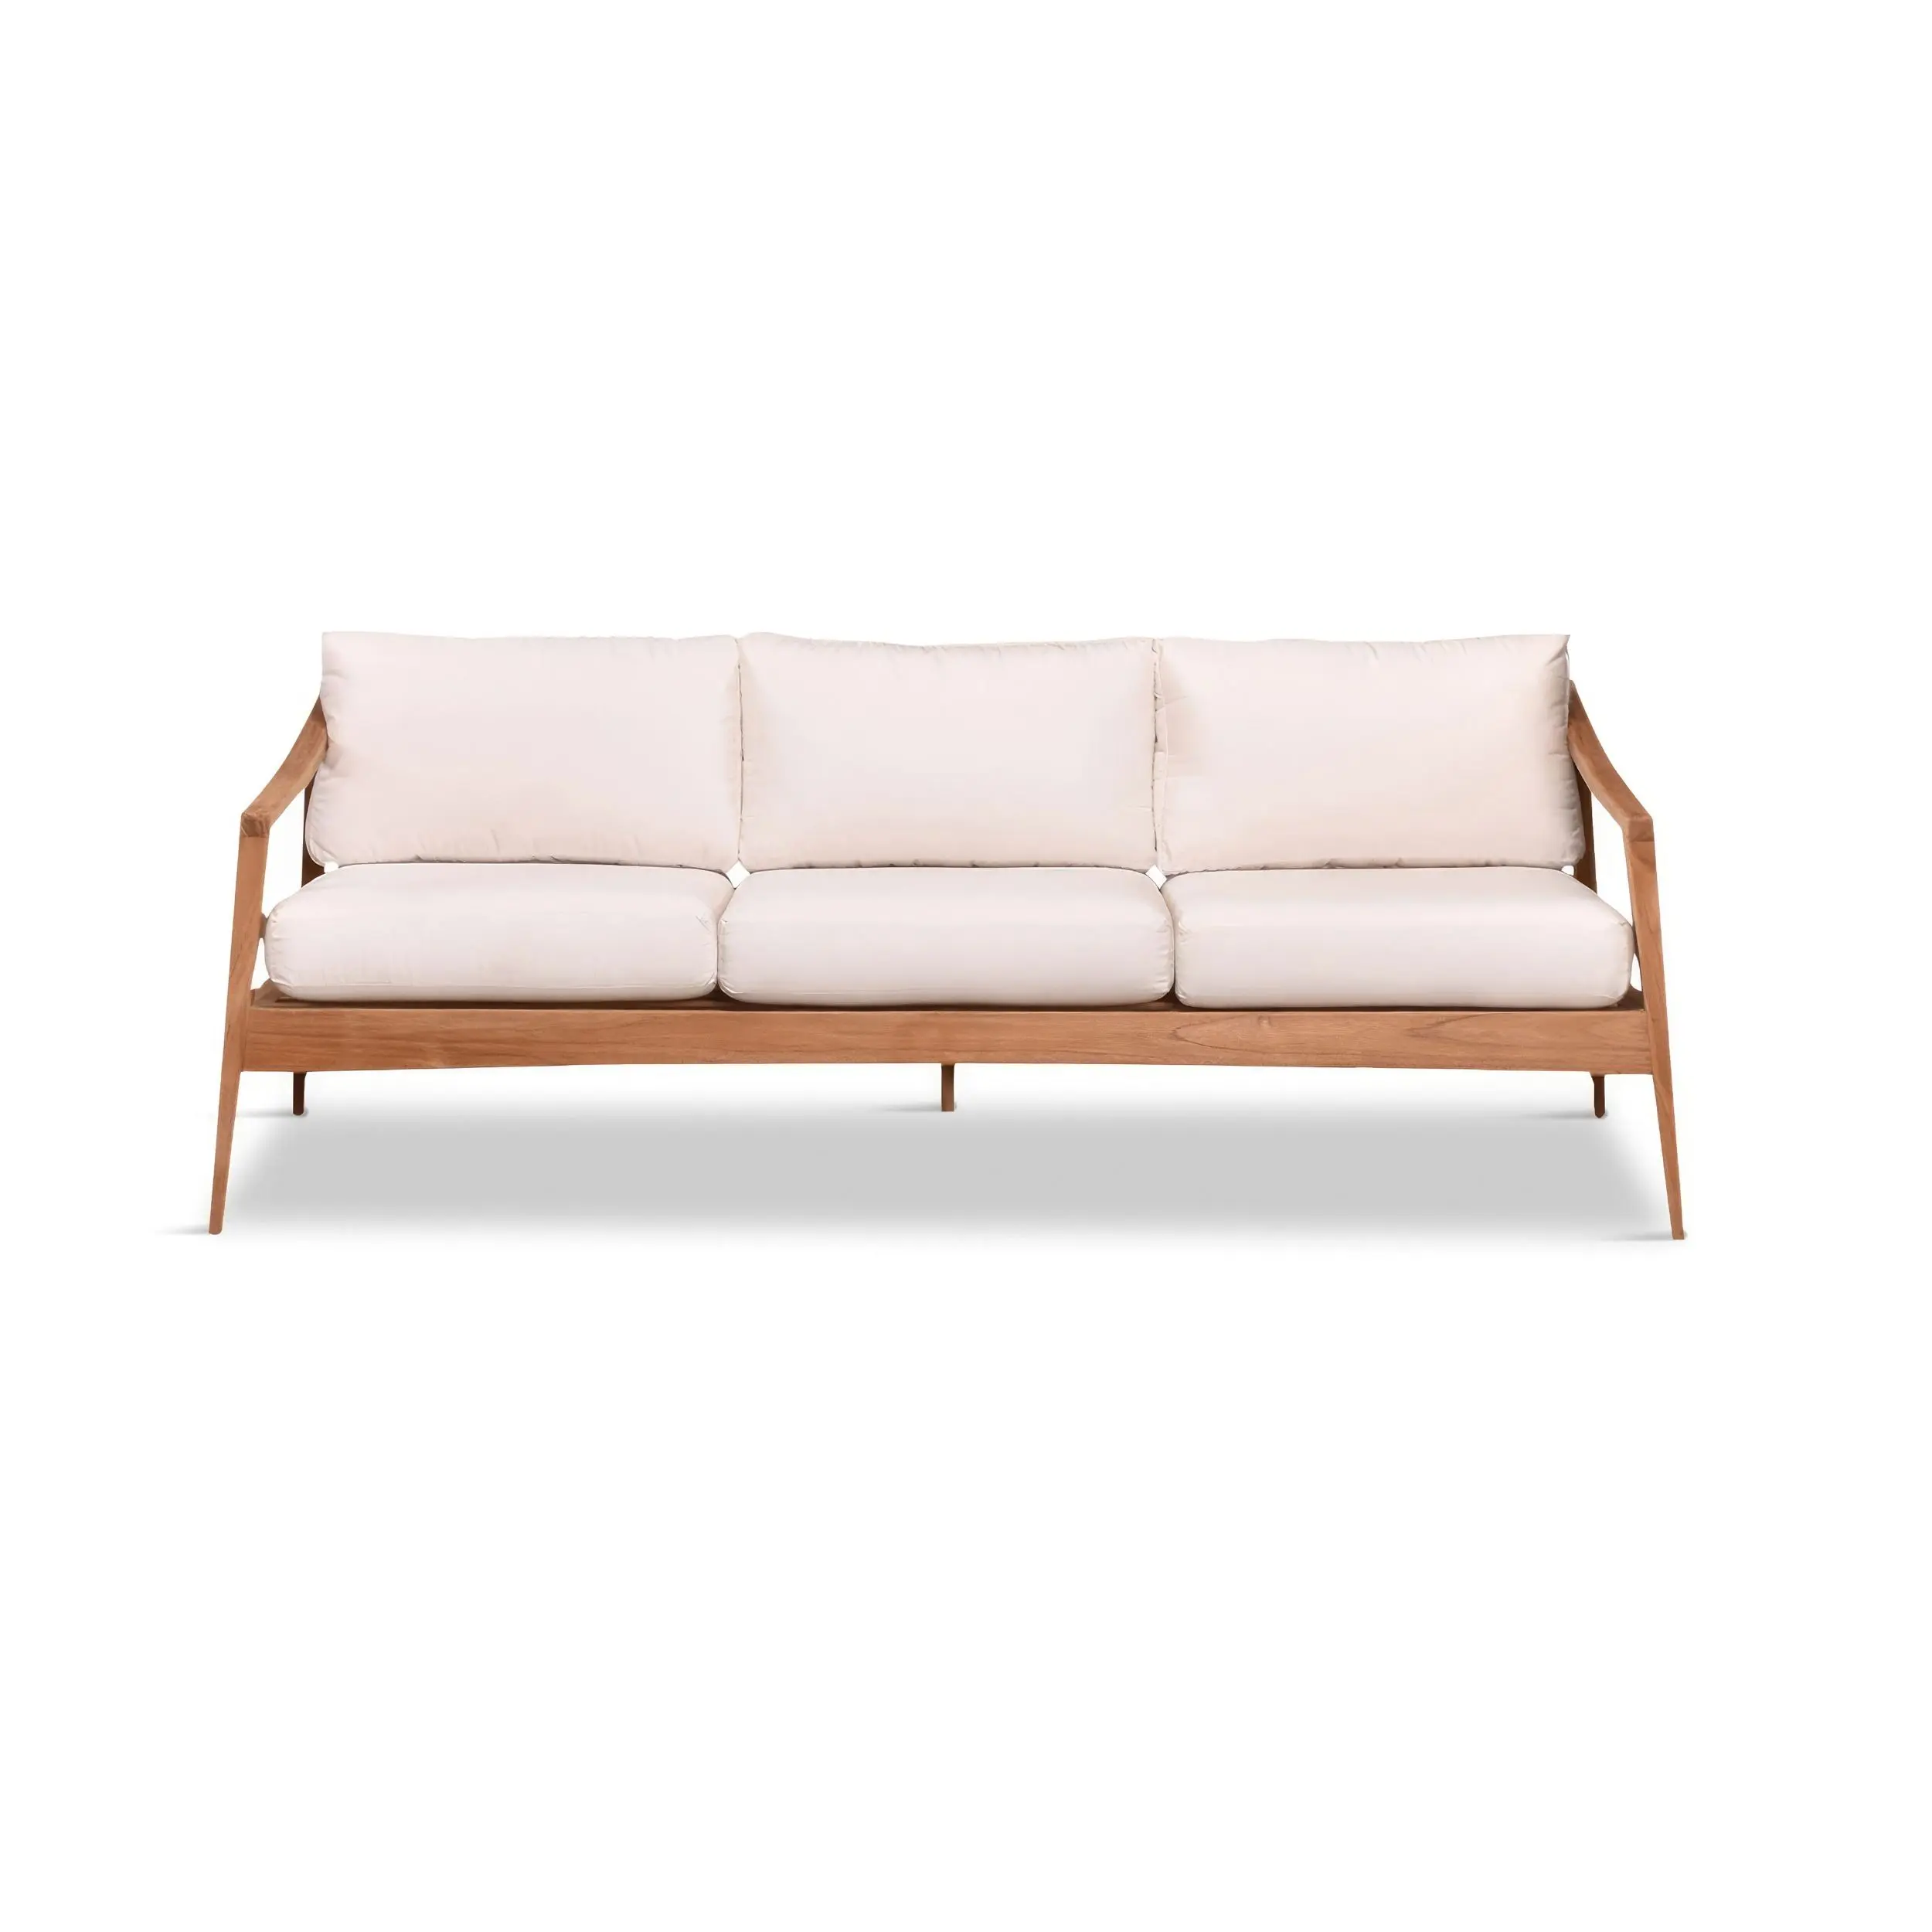 The Tango teak sofa by Harmonia Living is one of our favorite teak furnishings